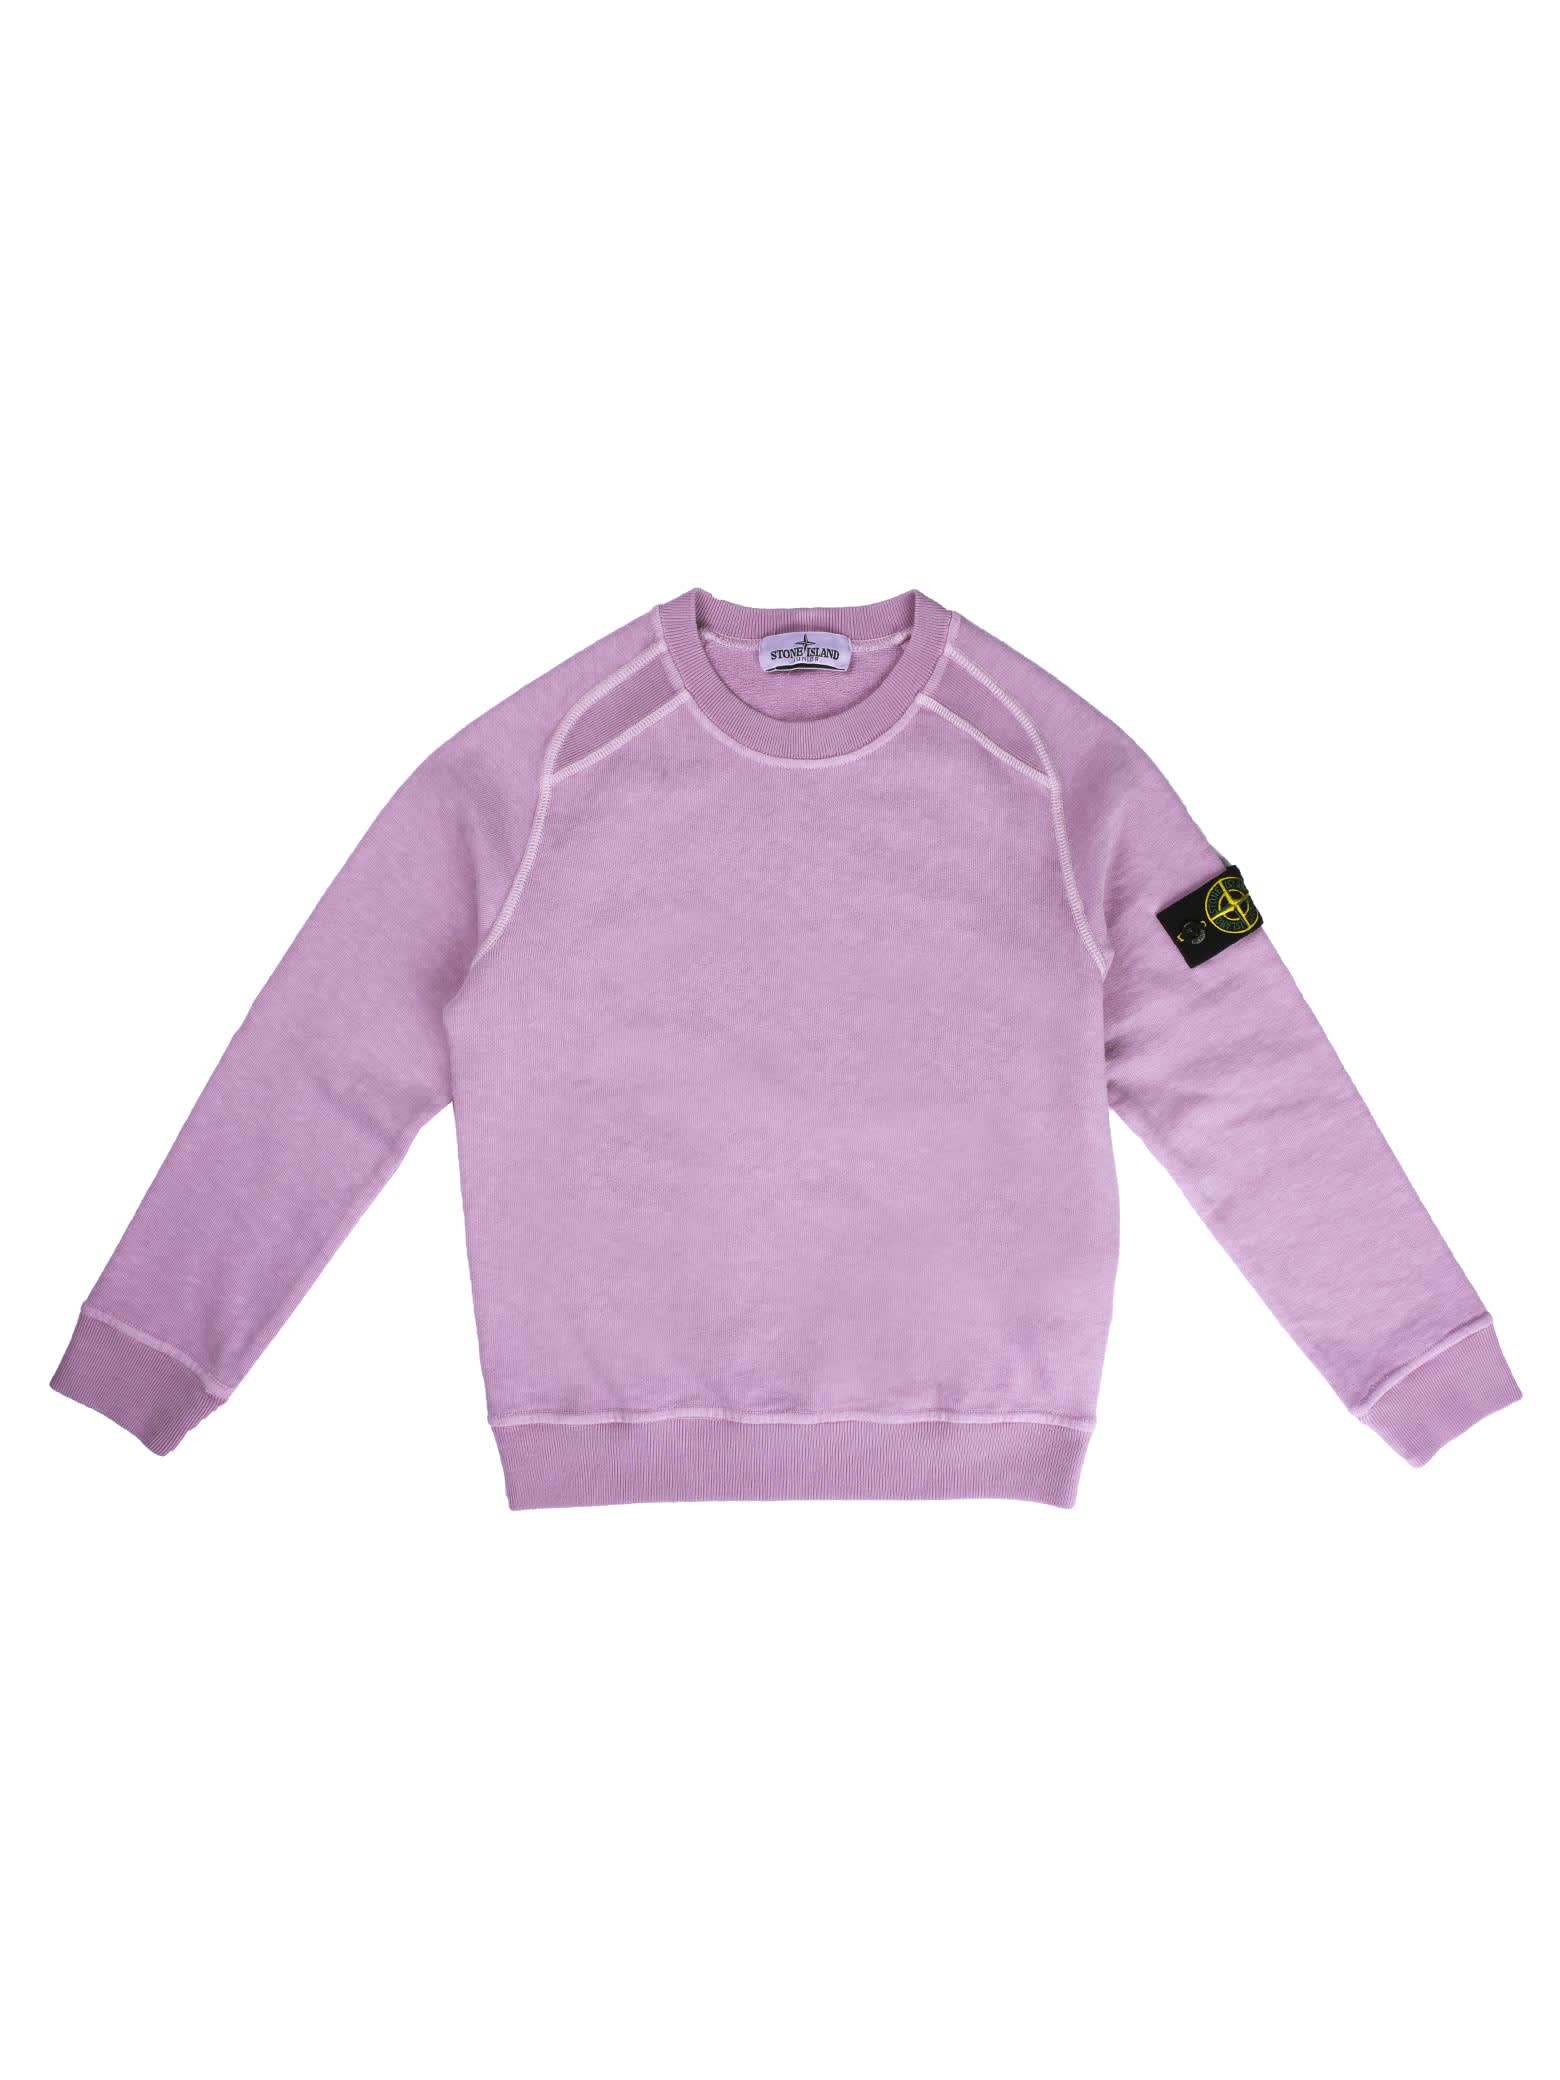 Stone Island Pink Crew Neck Sweatshirt